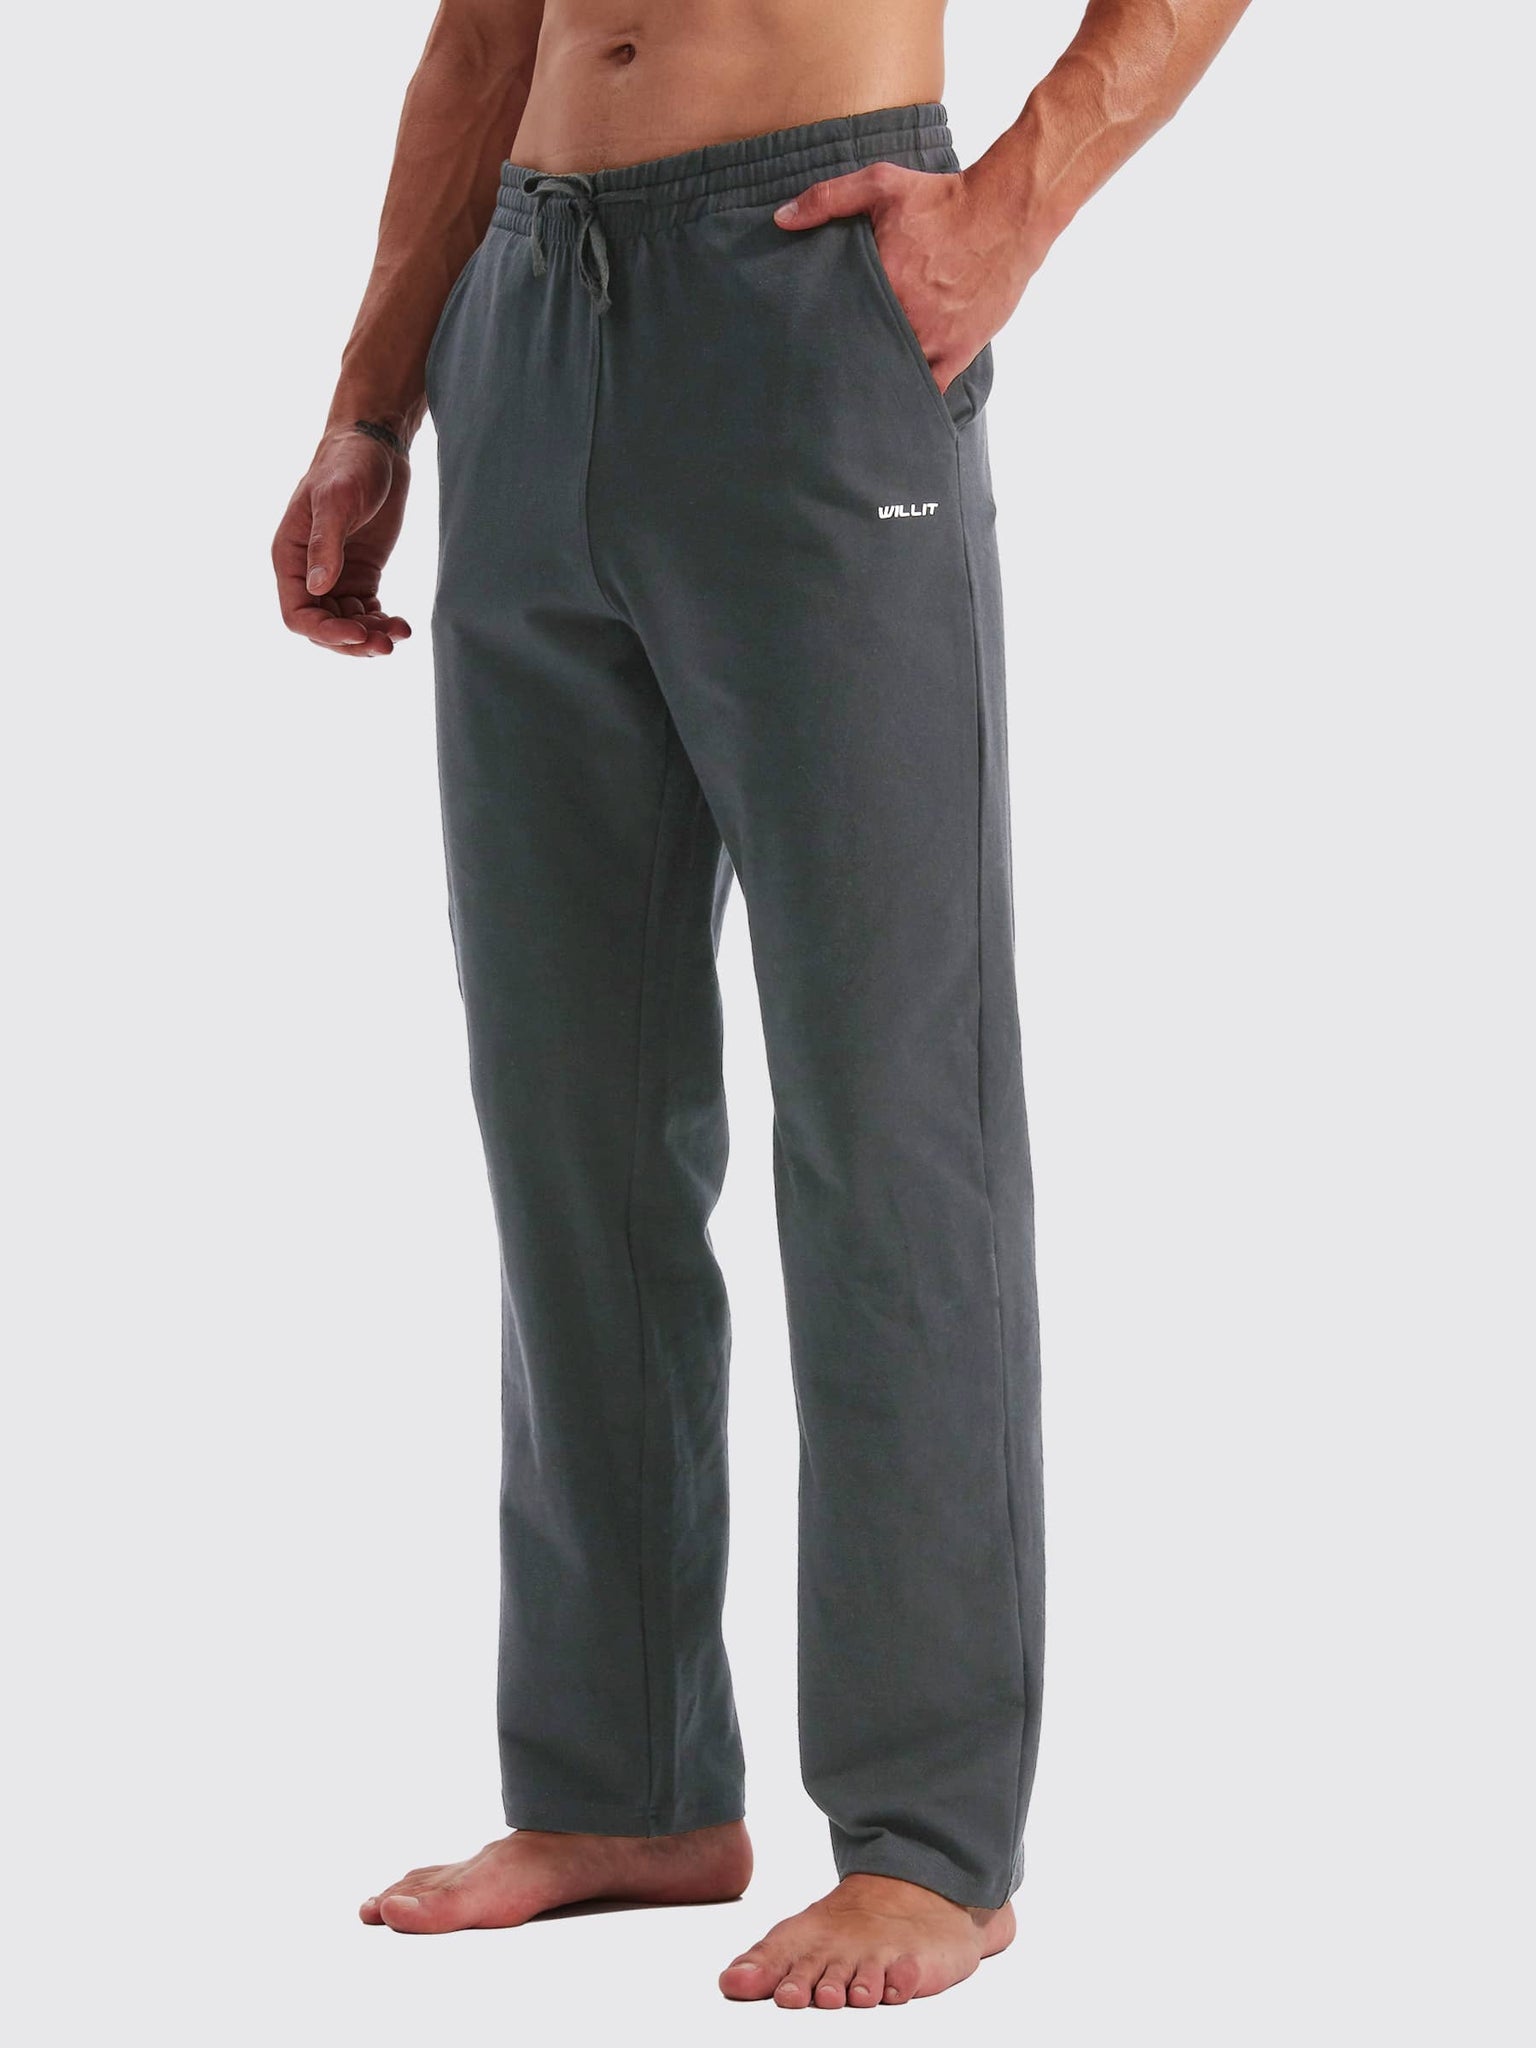 Men's Cotton Yoga Balance Sweatpants_DeepGray_model3